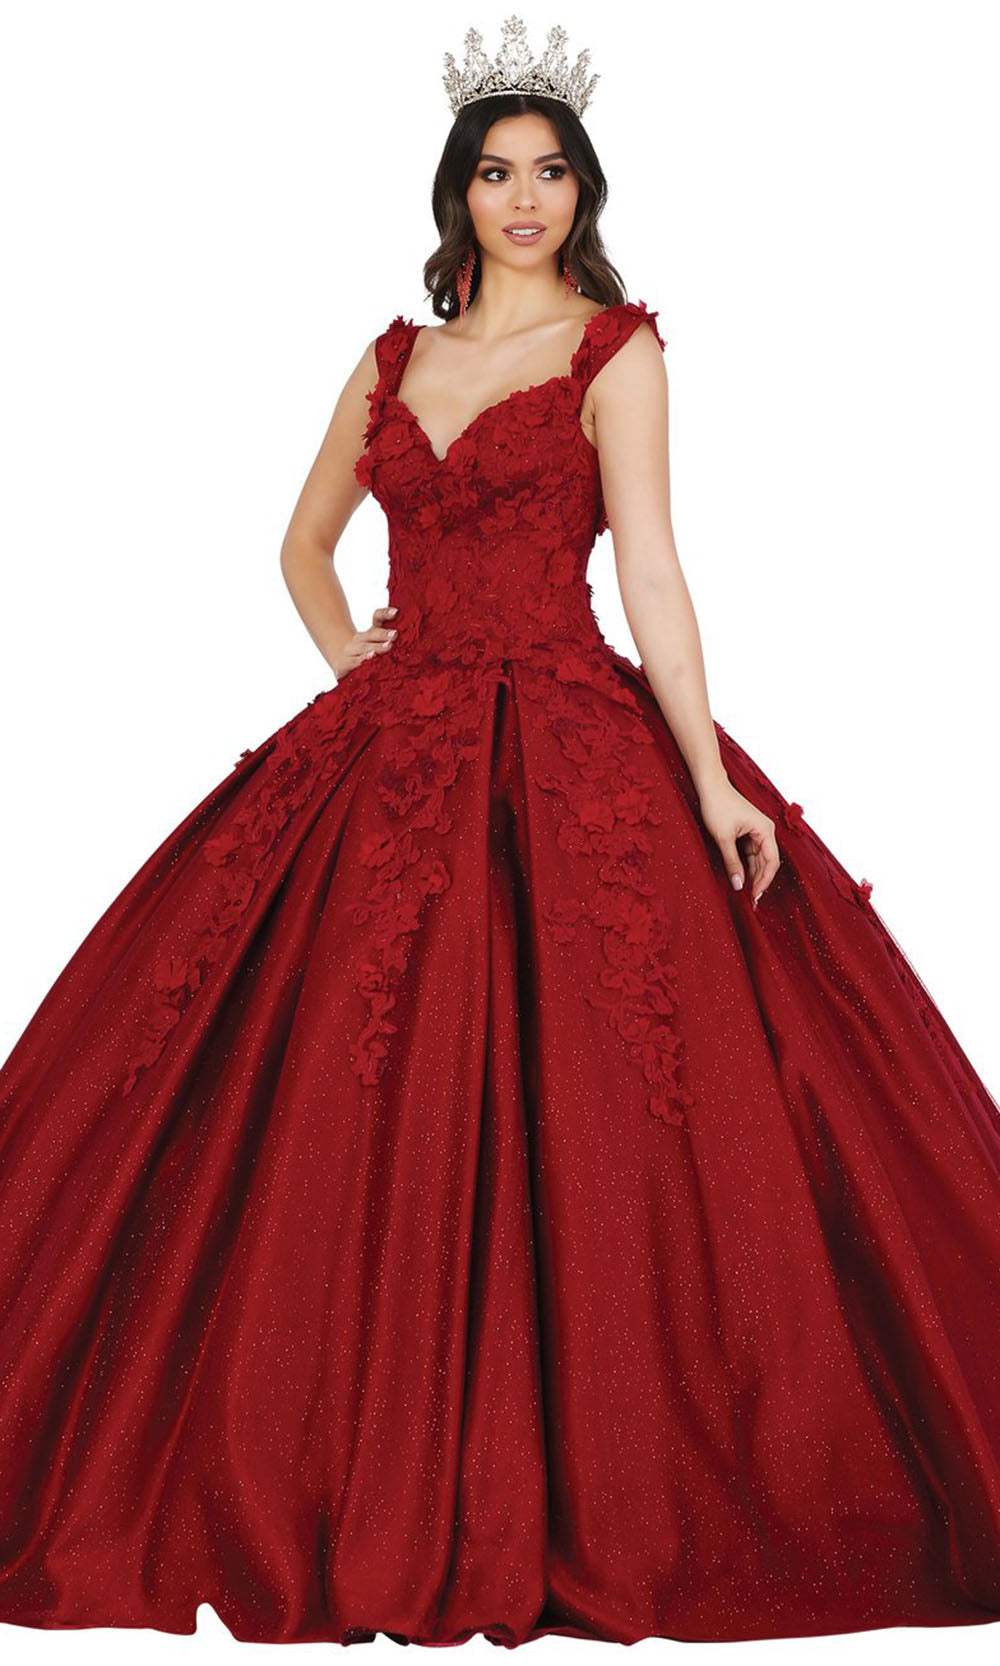 Dancing Queen - 1501 Floral Applique Ballgown In Red